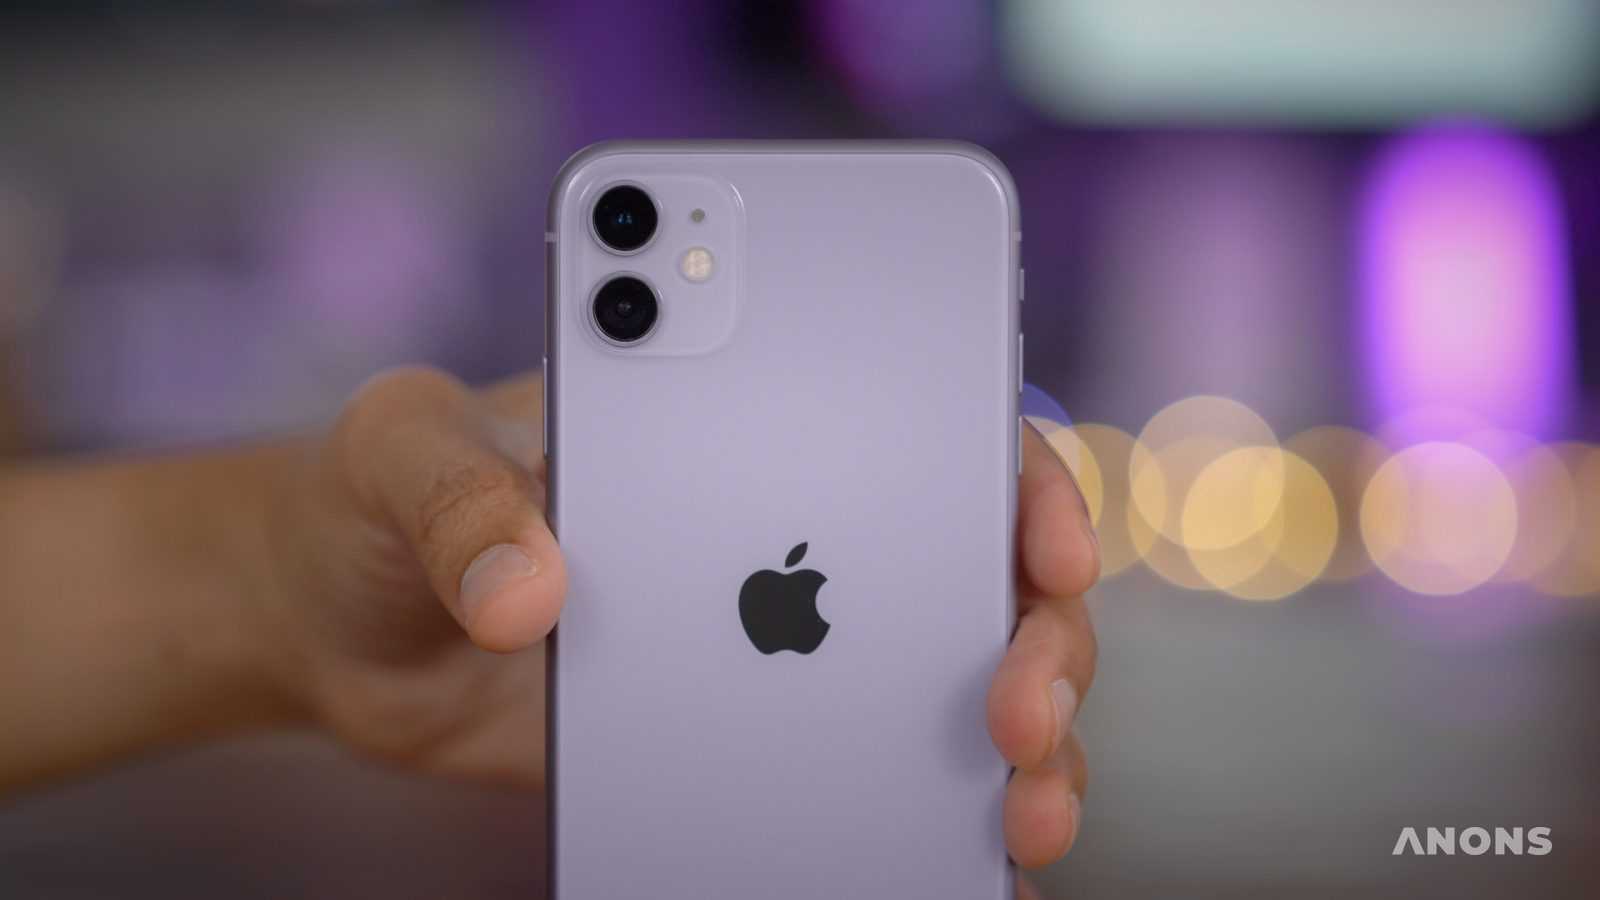 IPhone 11 обогнал по продажам самую популярную модель 2019 года IPhone XR